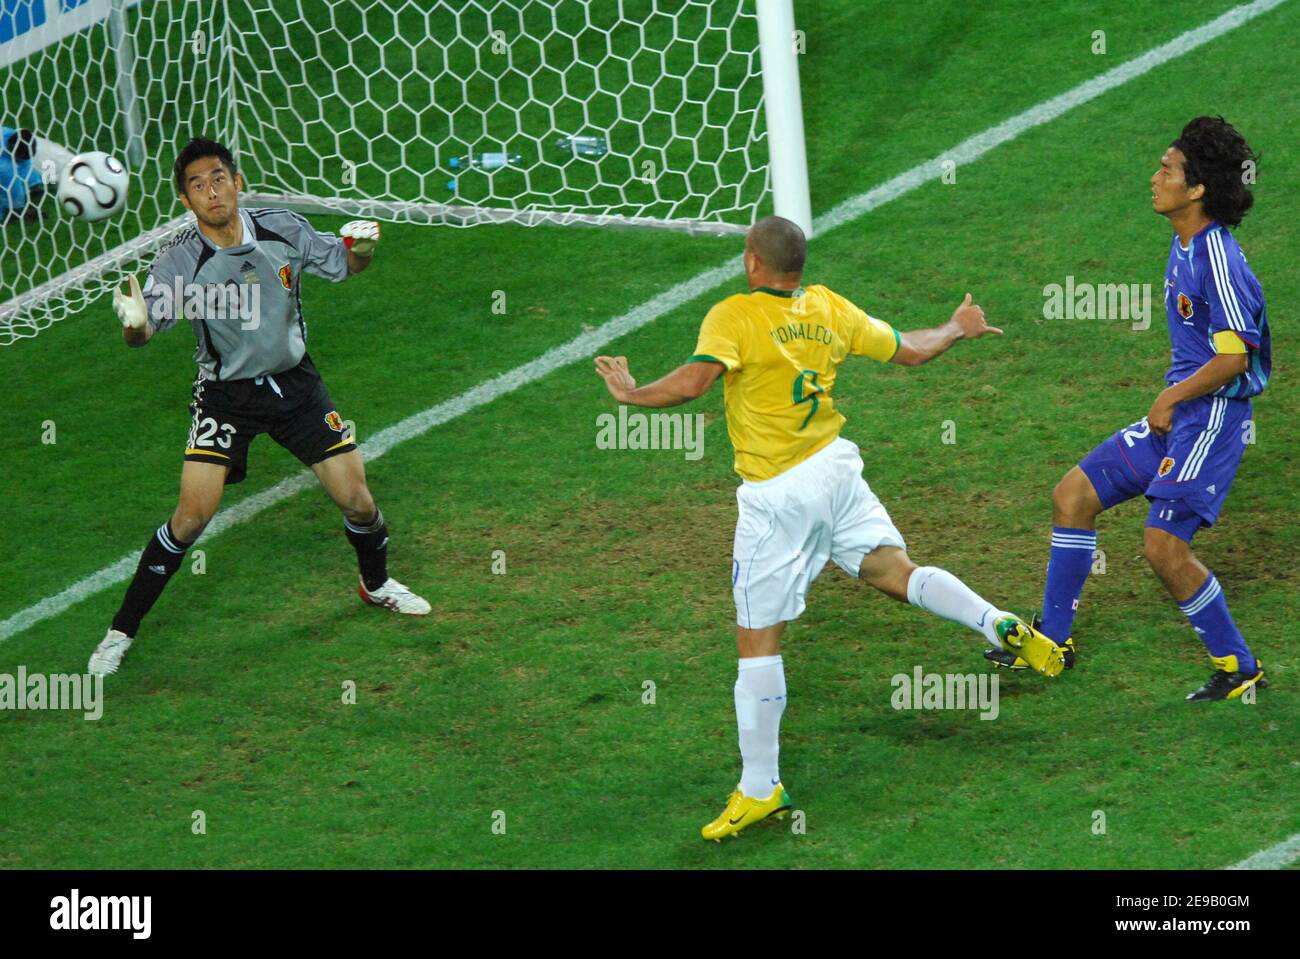 Brazil's Ronaldo scores during the World Cup 2006, Group F, Japan vs Brazil at the Signal Iduna Park stadium in Dortmund, Germany 22, 2006. Brazil won 4-1. Photo by Gouhier-Hahn-Orban/Cameleon/ABACAPRESS.COM Stock Photo